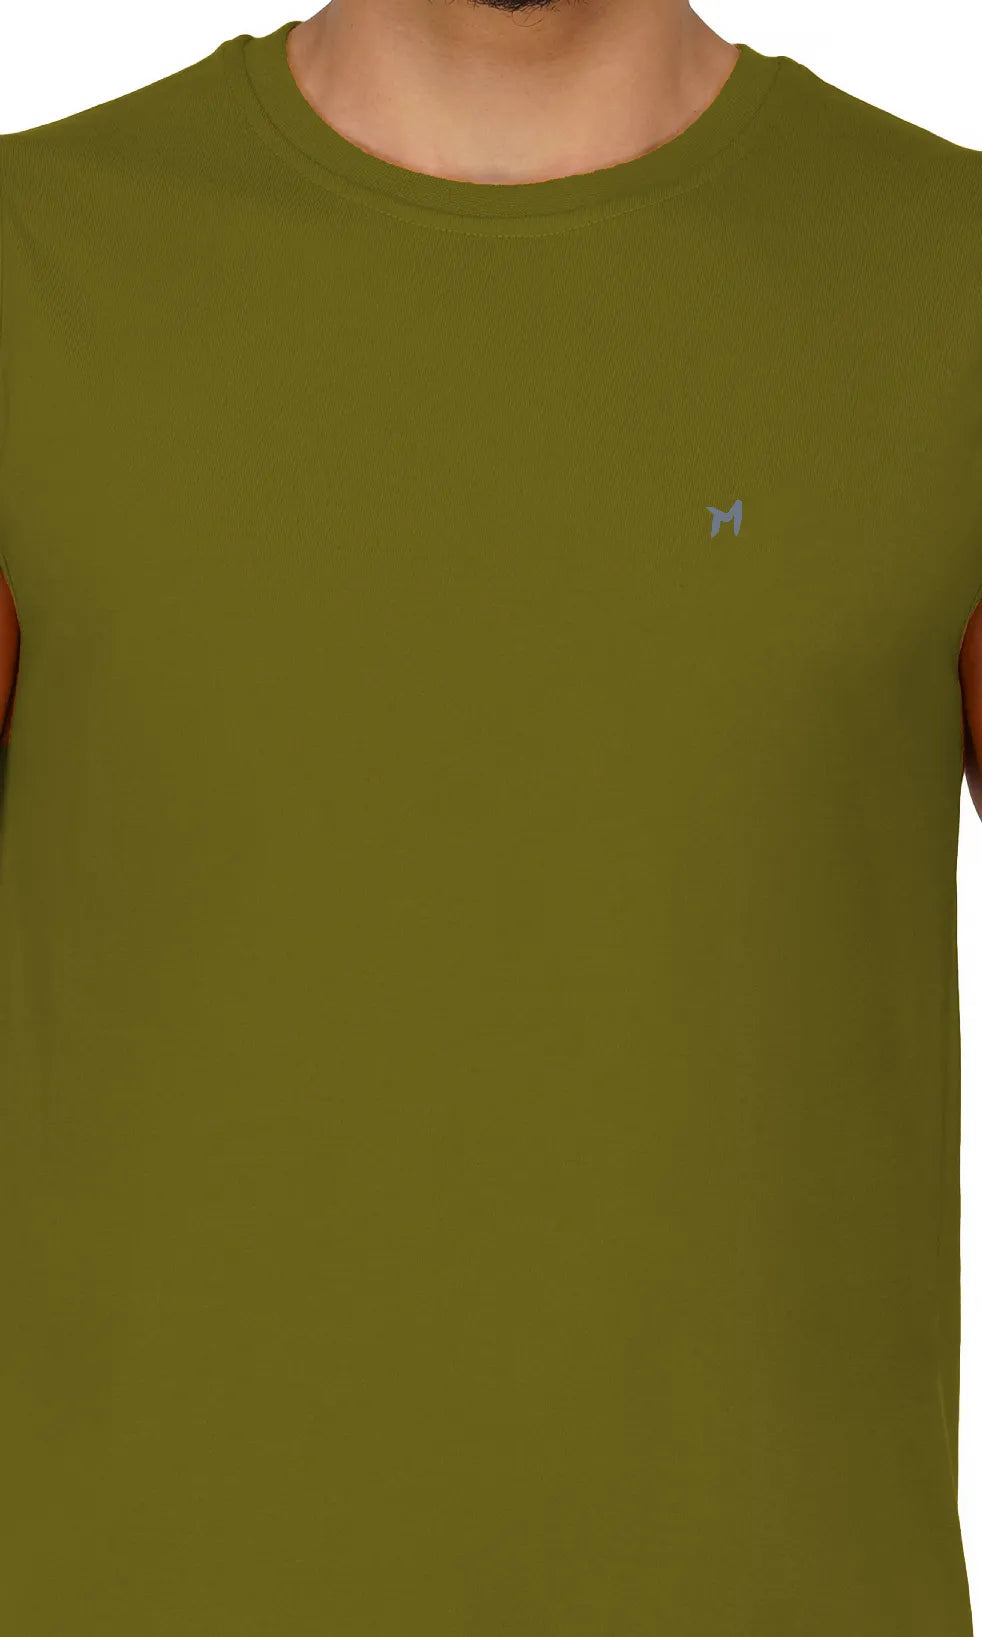 Mebadass Cotton Men's Sleeveless Regular Size Vests - Olive Green